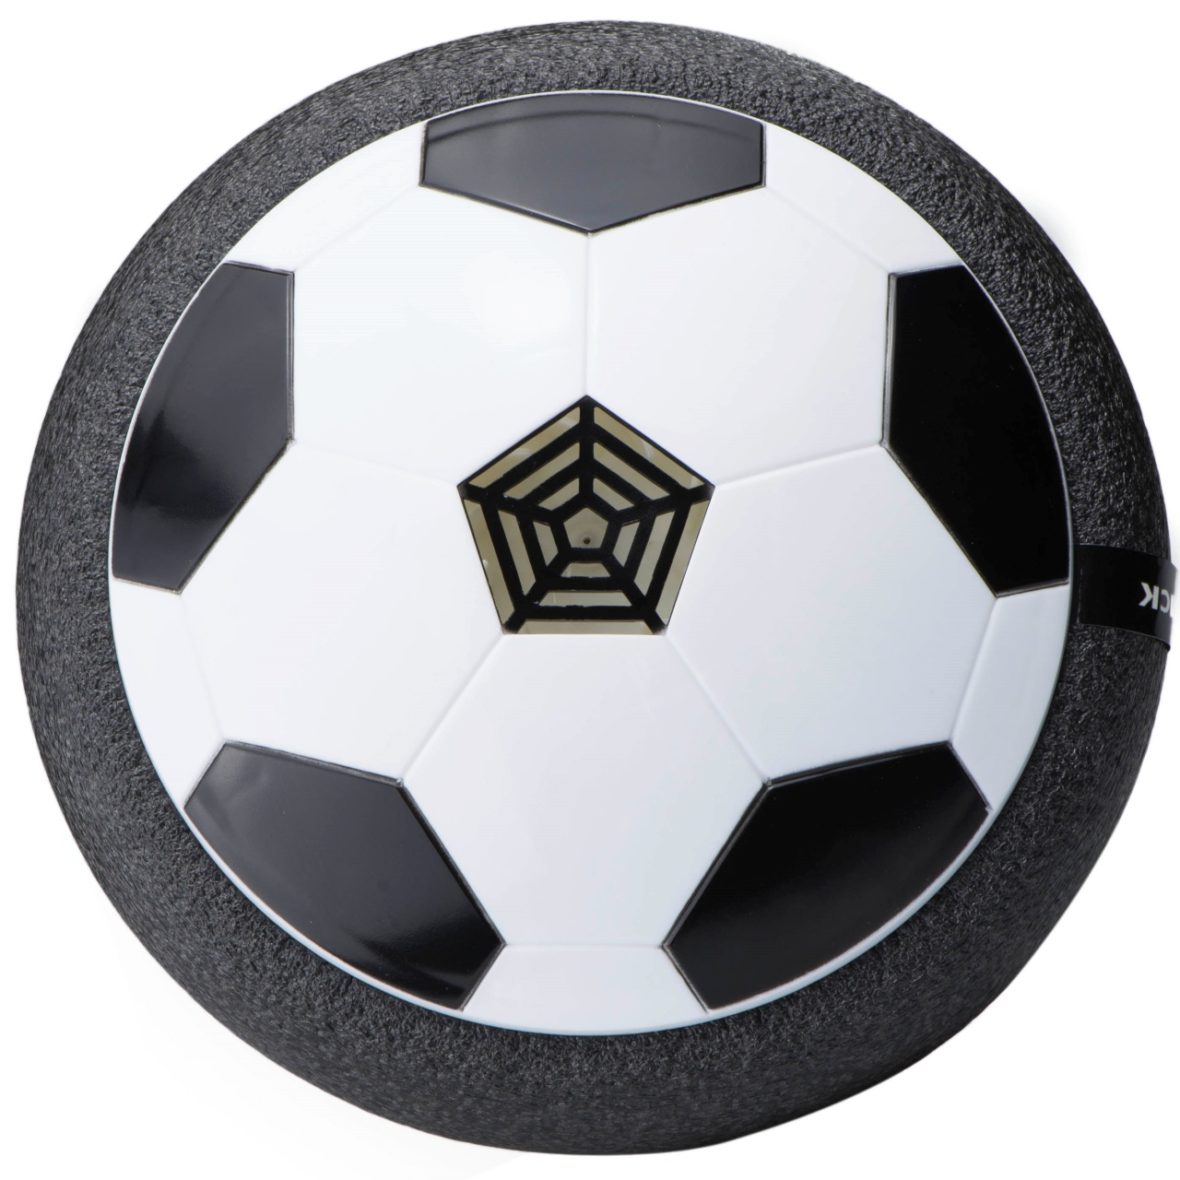 Interaktyvus futbolo kamuolys su LED Hoverball 03